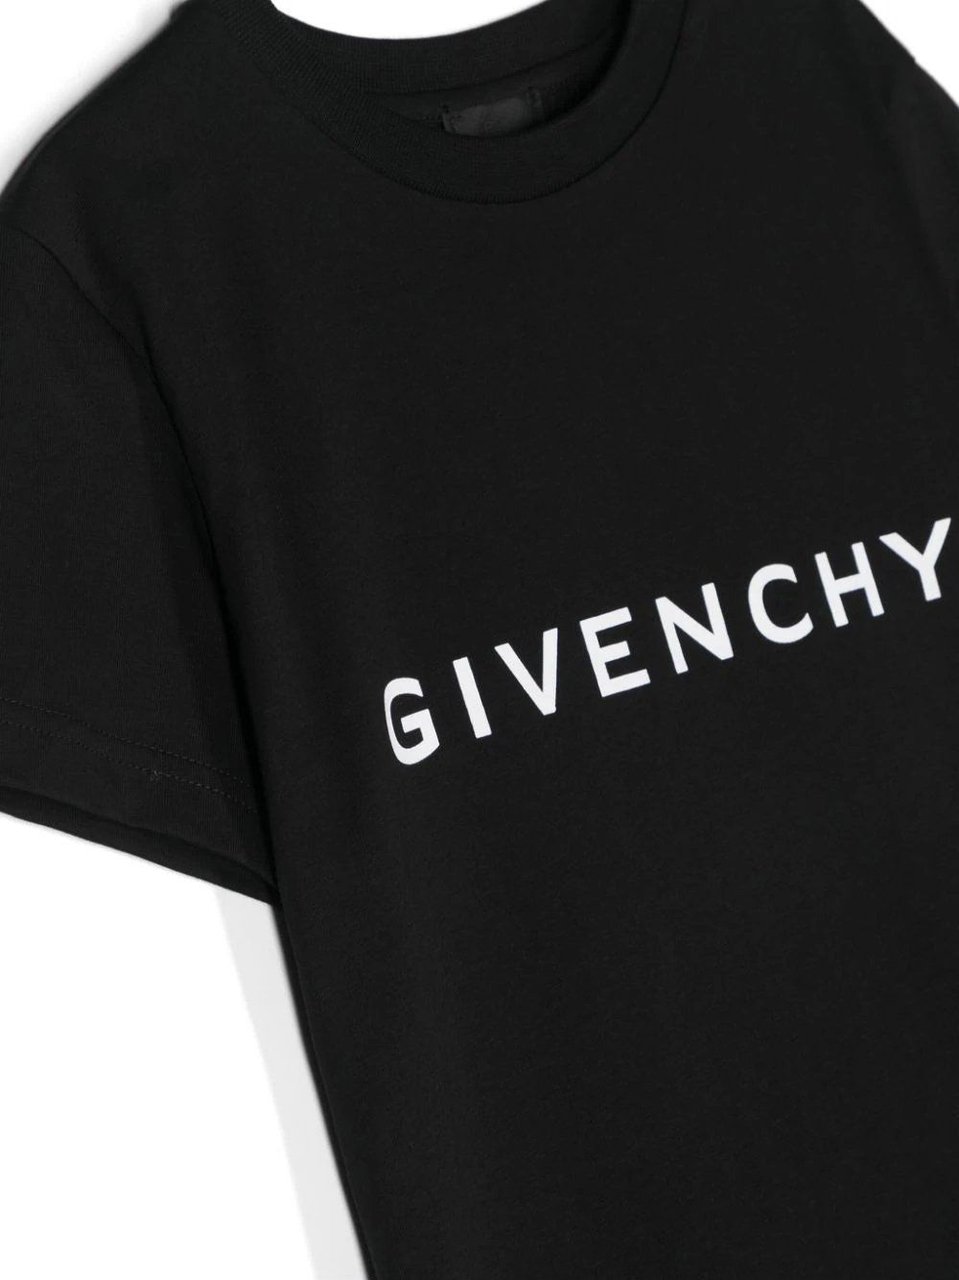 Givenchy T-shirt Korte Mouwen Zwart